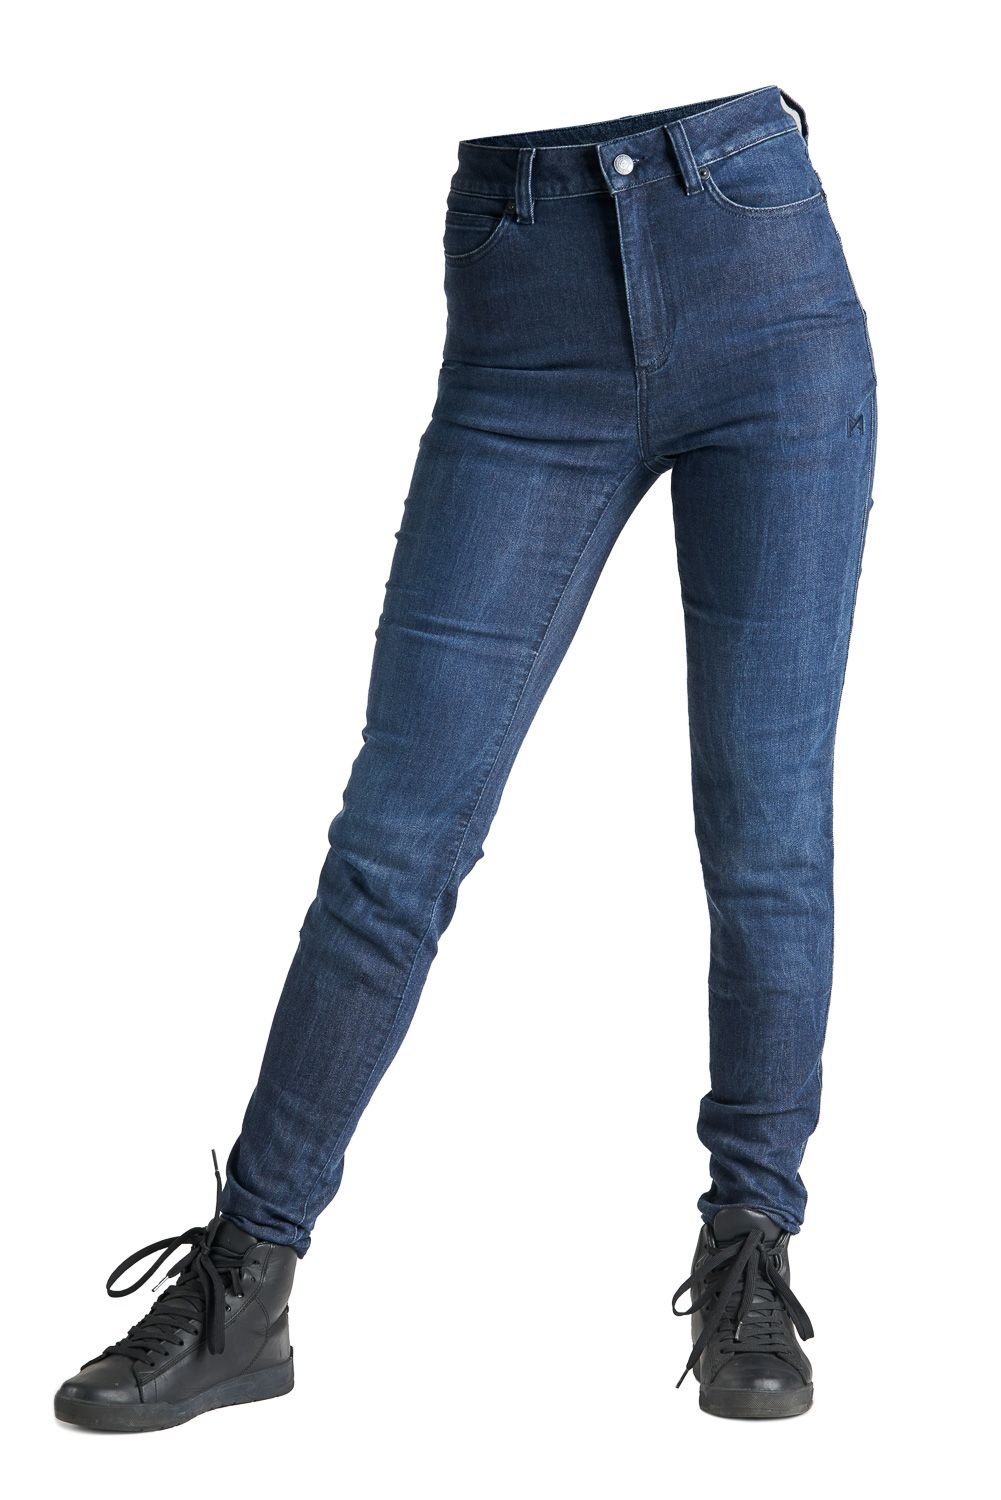 Image of Pando Moto Kusari Cor 02 Women Motorcycle Jeans Skinny-Fit Cordura Size W30/L32 ID 7851049505116